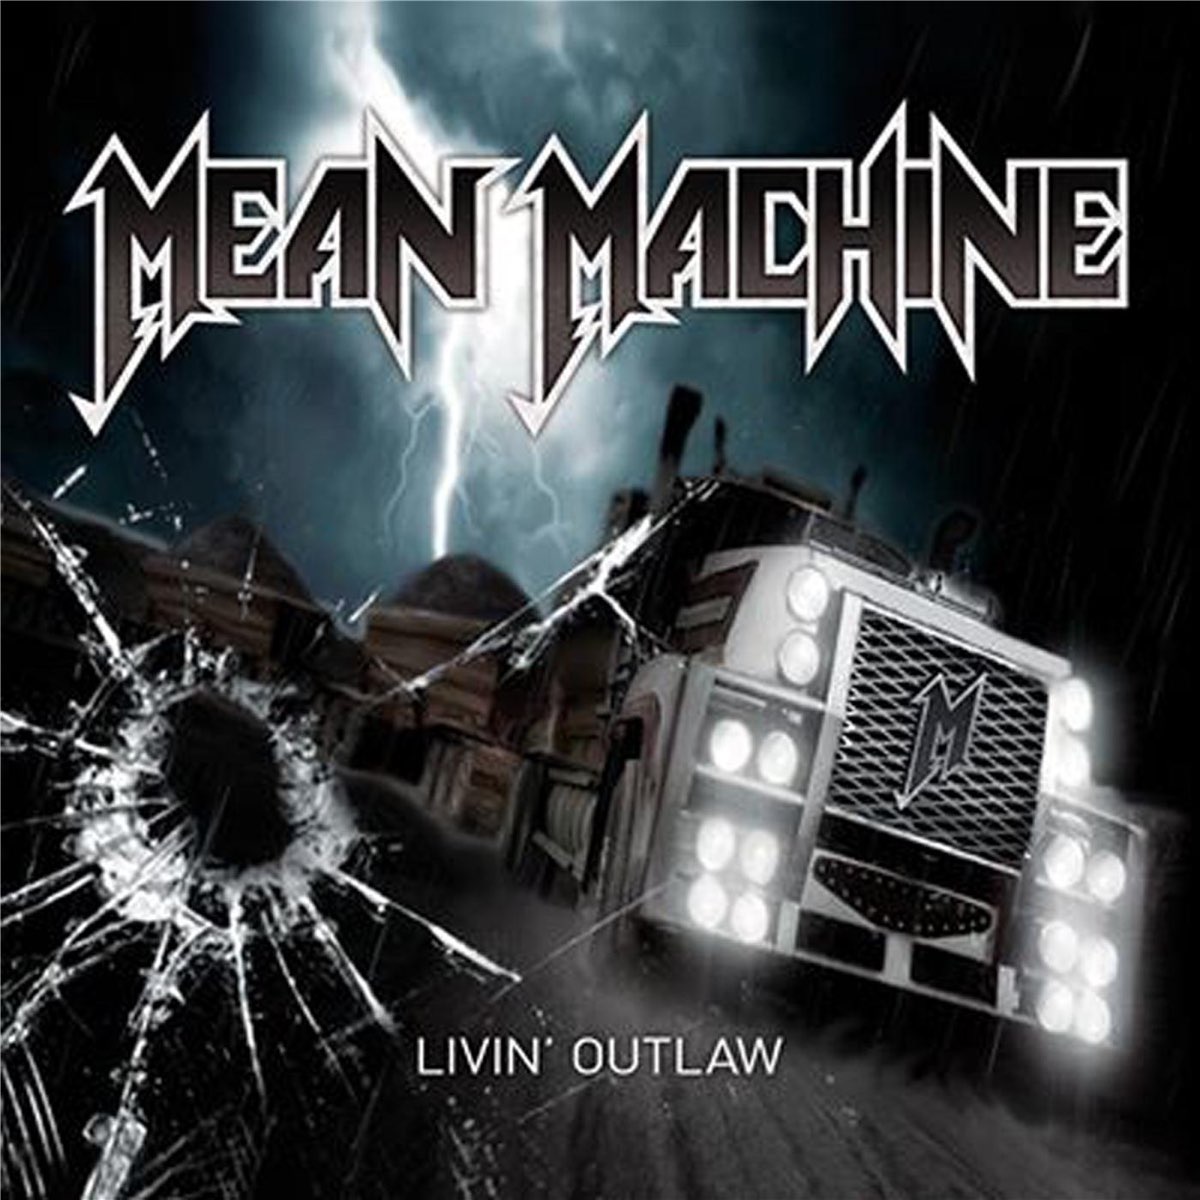 Livin' Outlaw - Album by Mean Machine - Apple Music